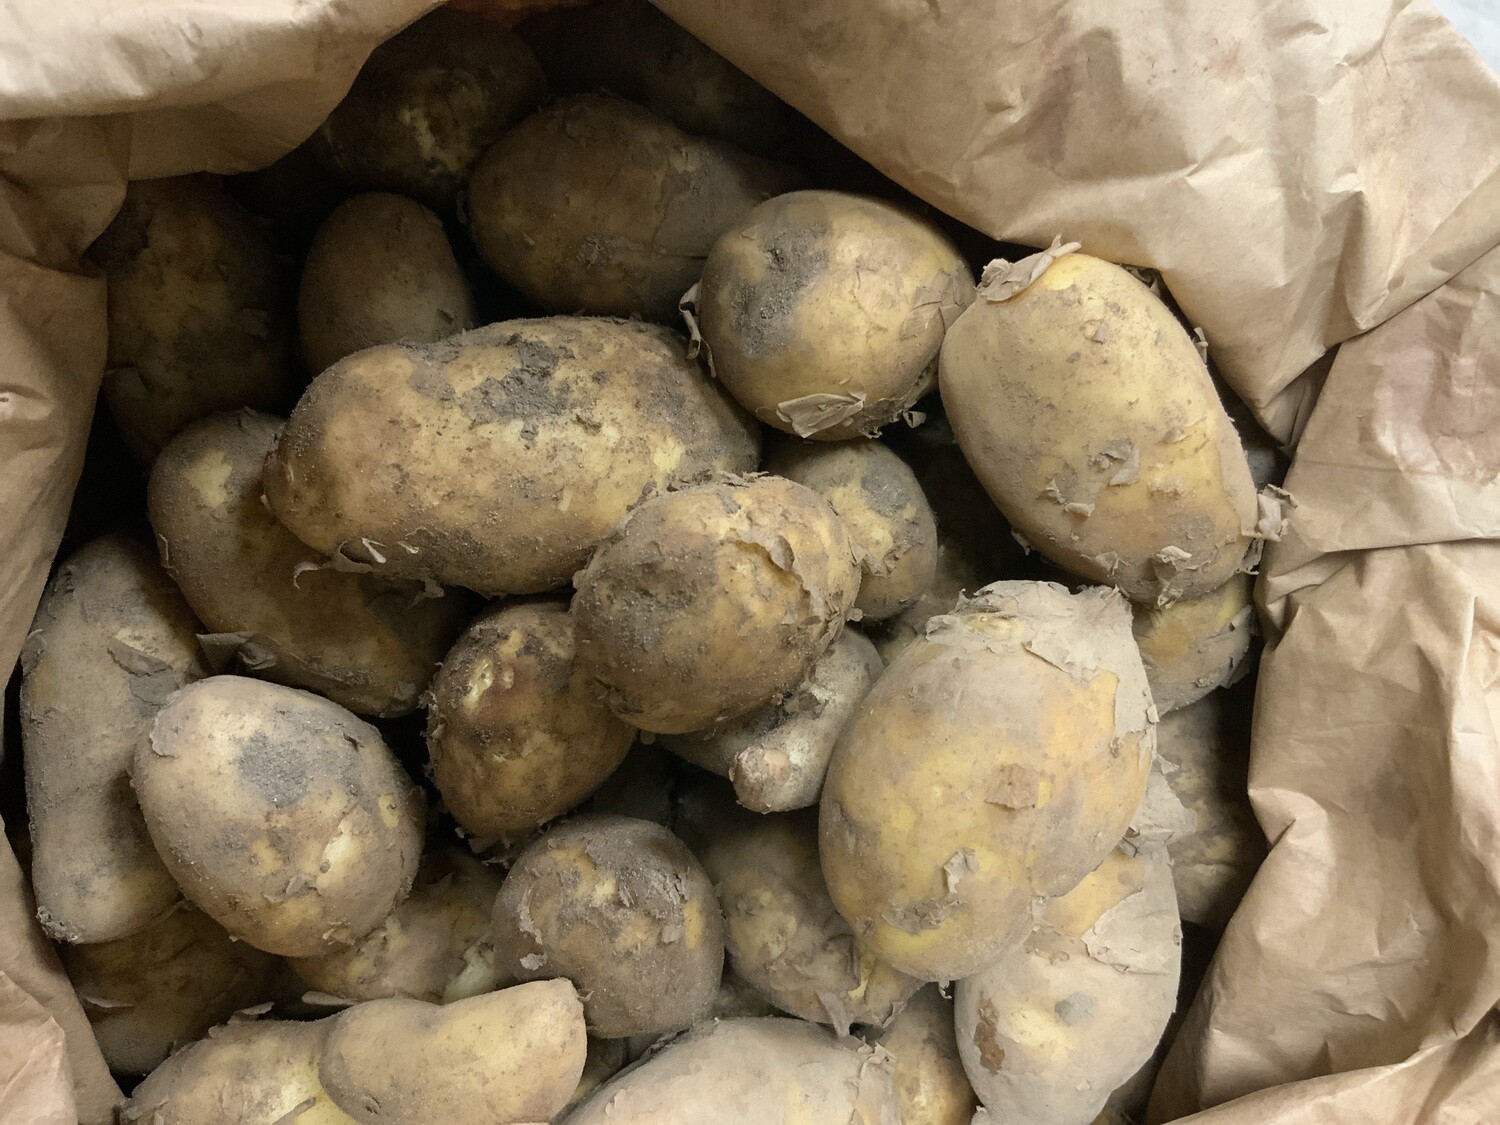 Jersey Royal Potatoes. New season. 450g pack